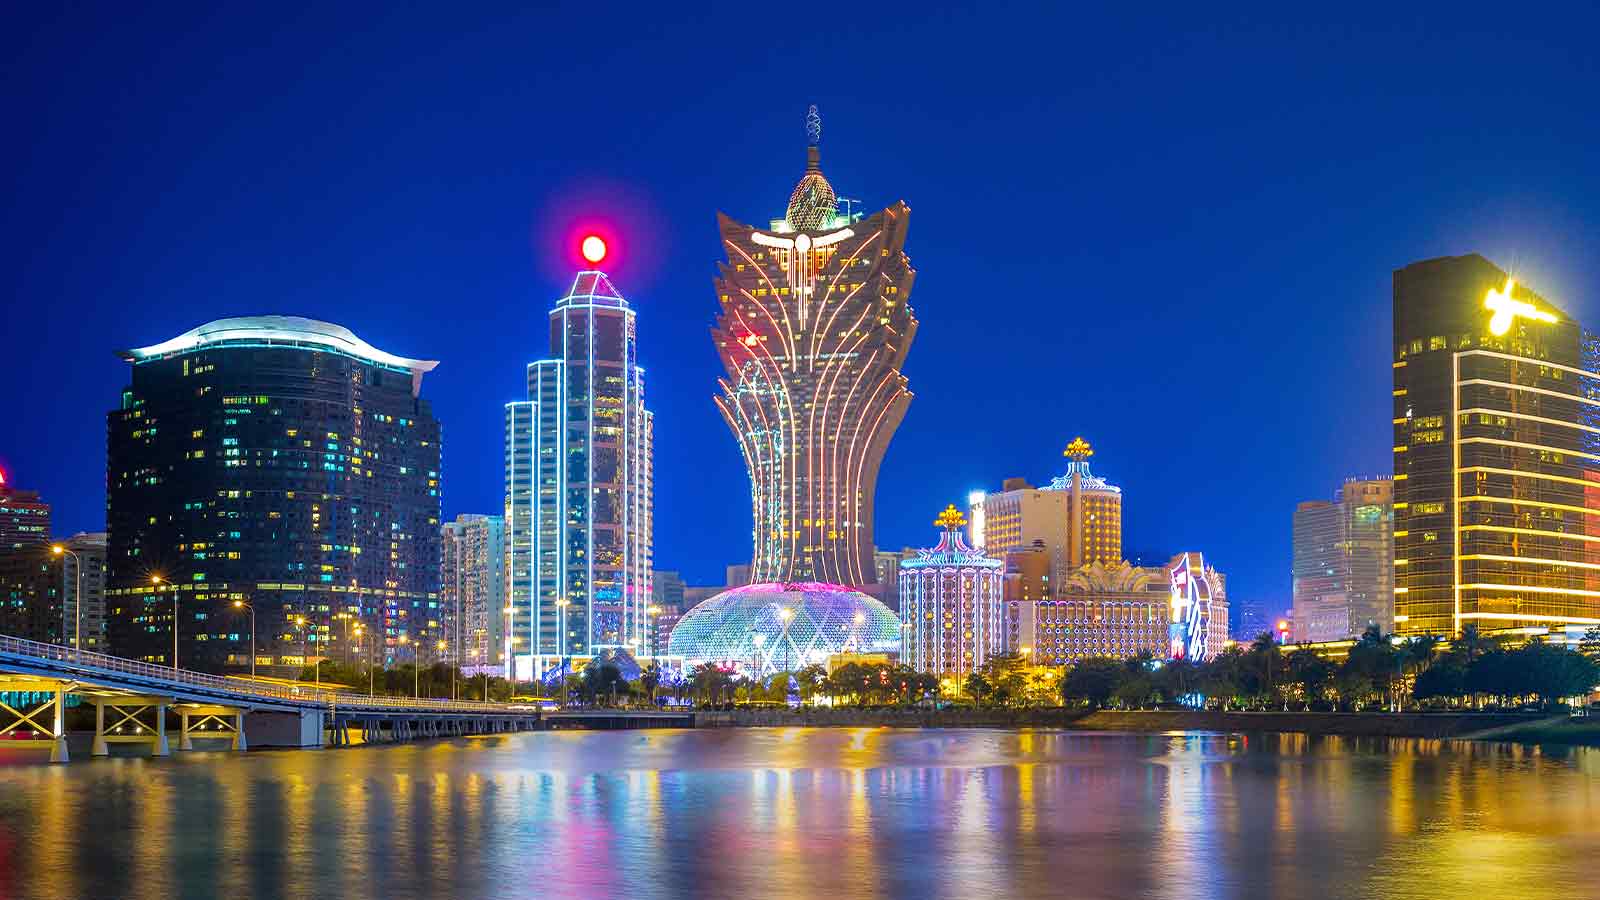 Macau Casino landscape familiarization